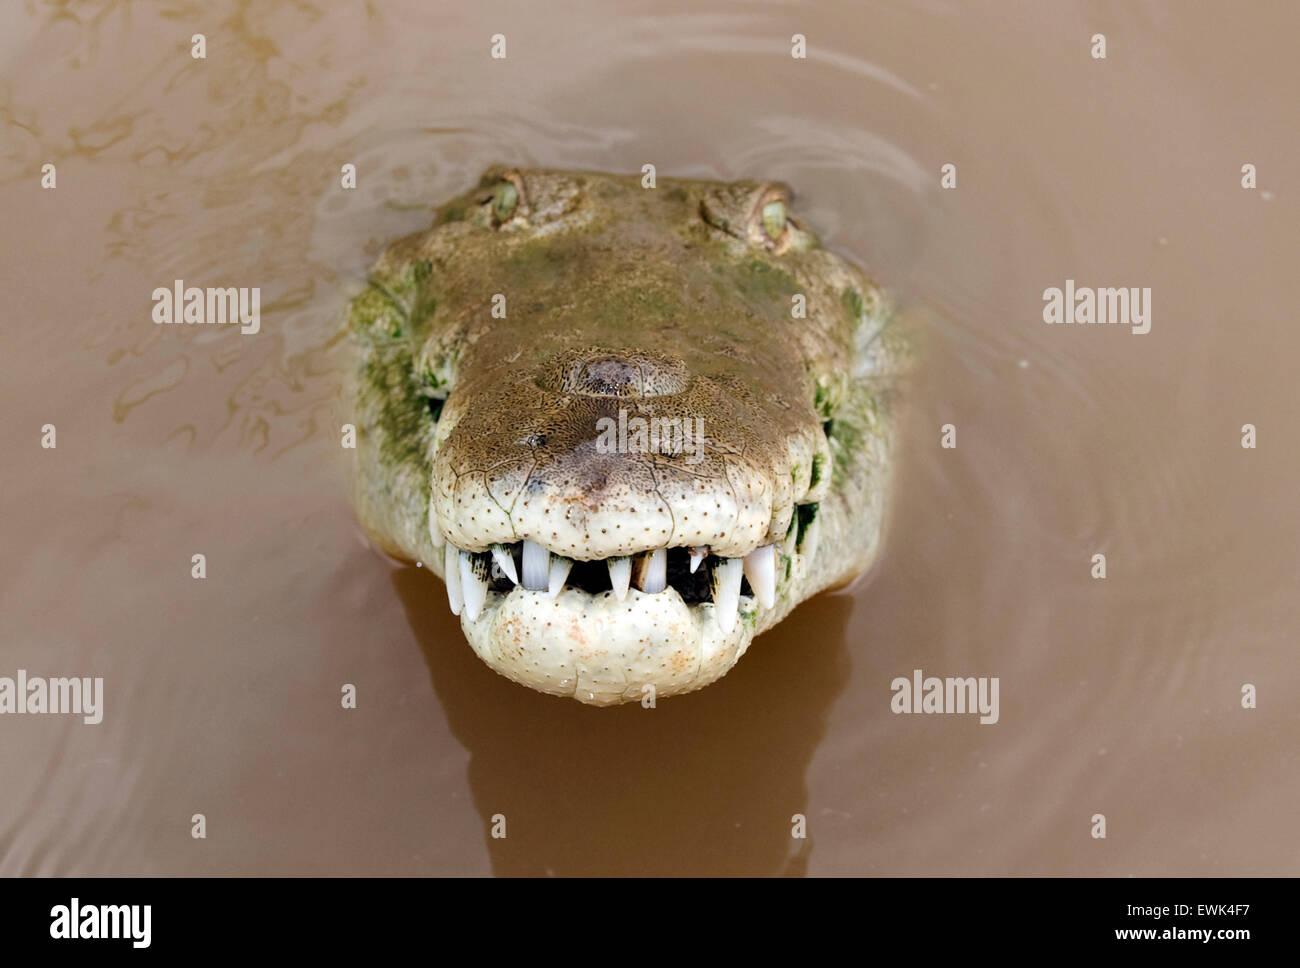 a american crocodile or Crocodylus acutus seen in the tarcoles river in costa rica Stock Photo